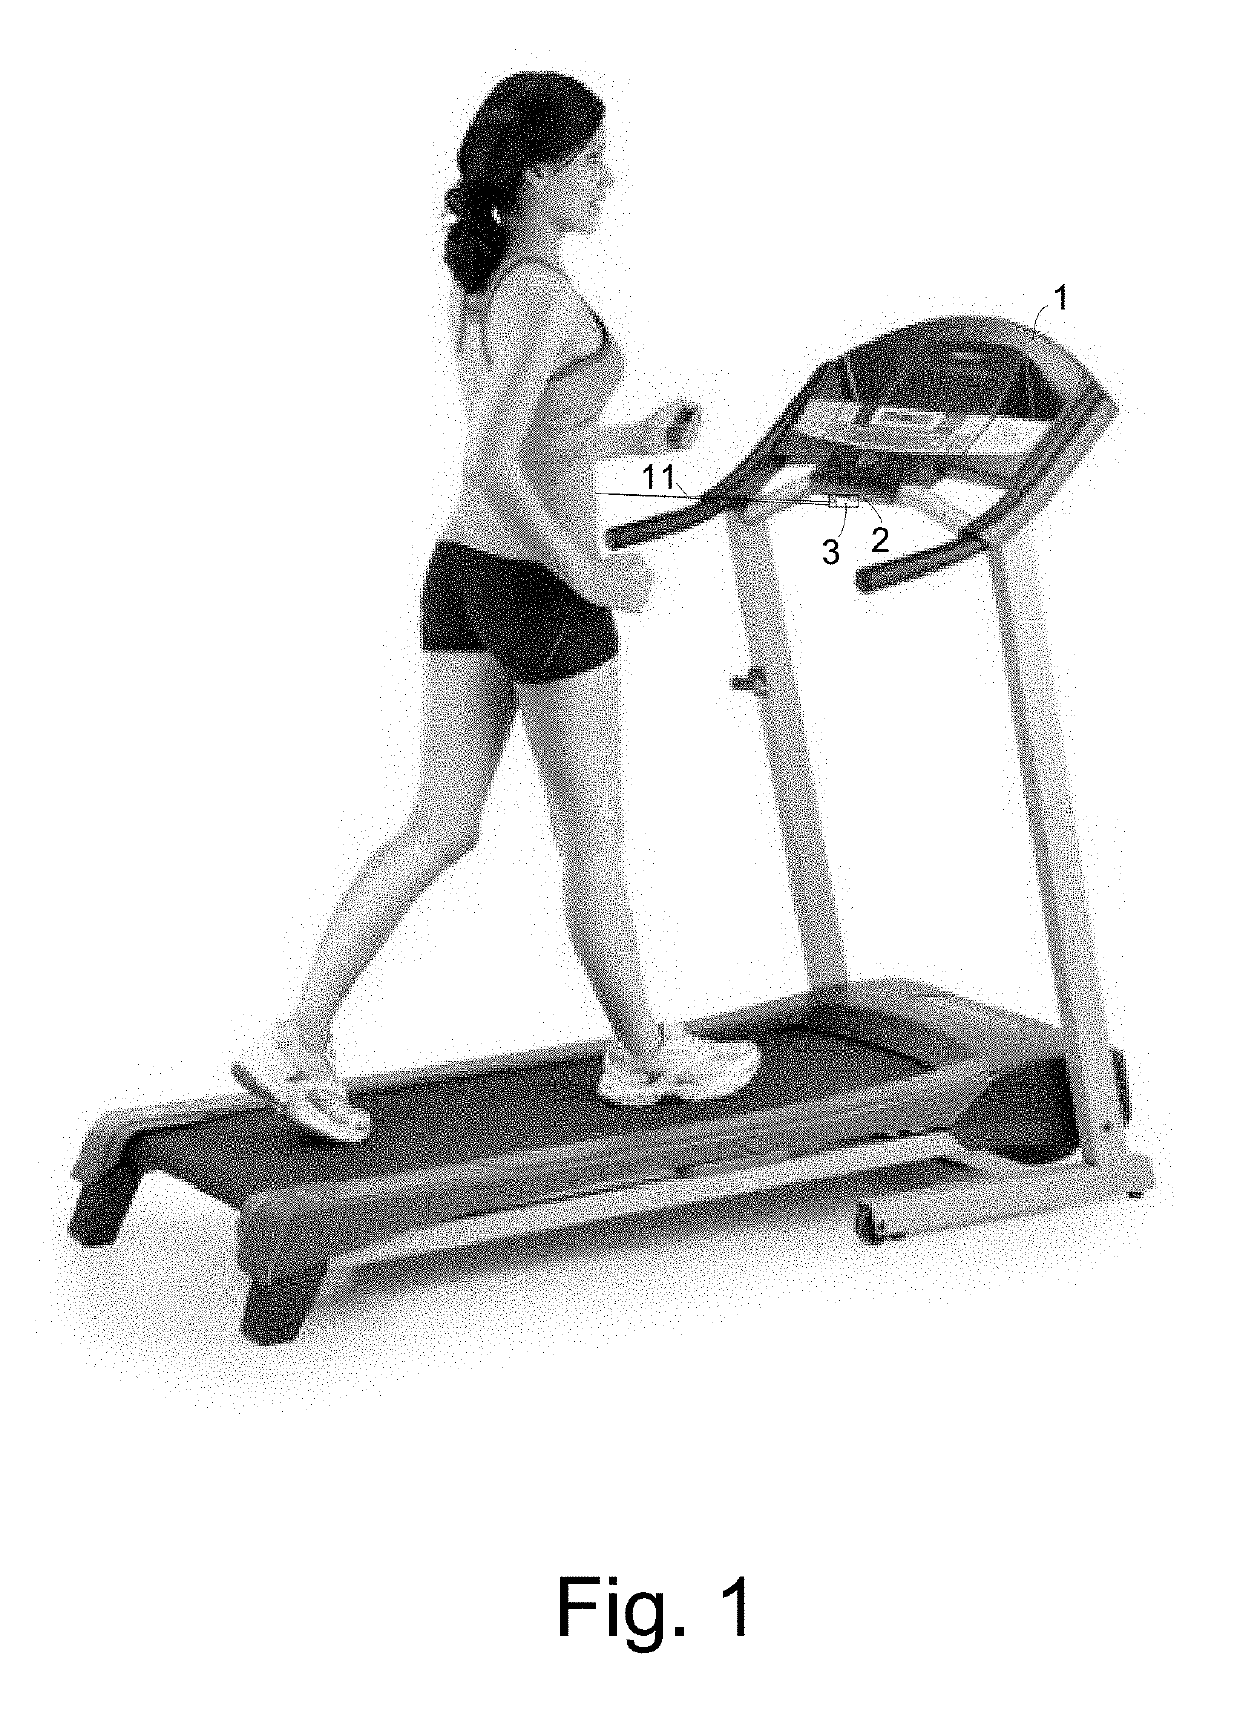 Treadmill safety device